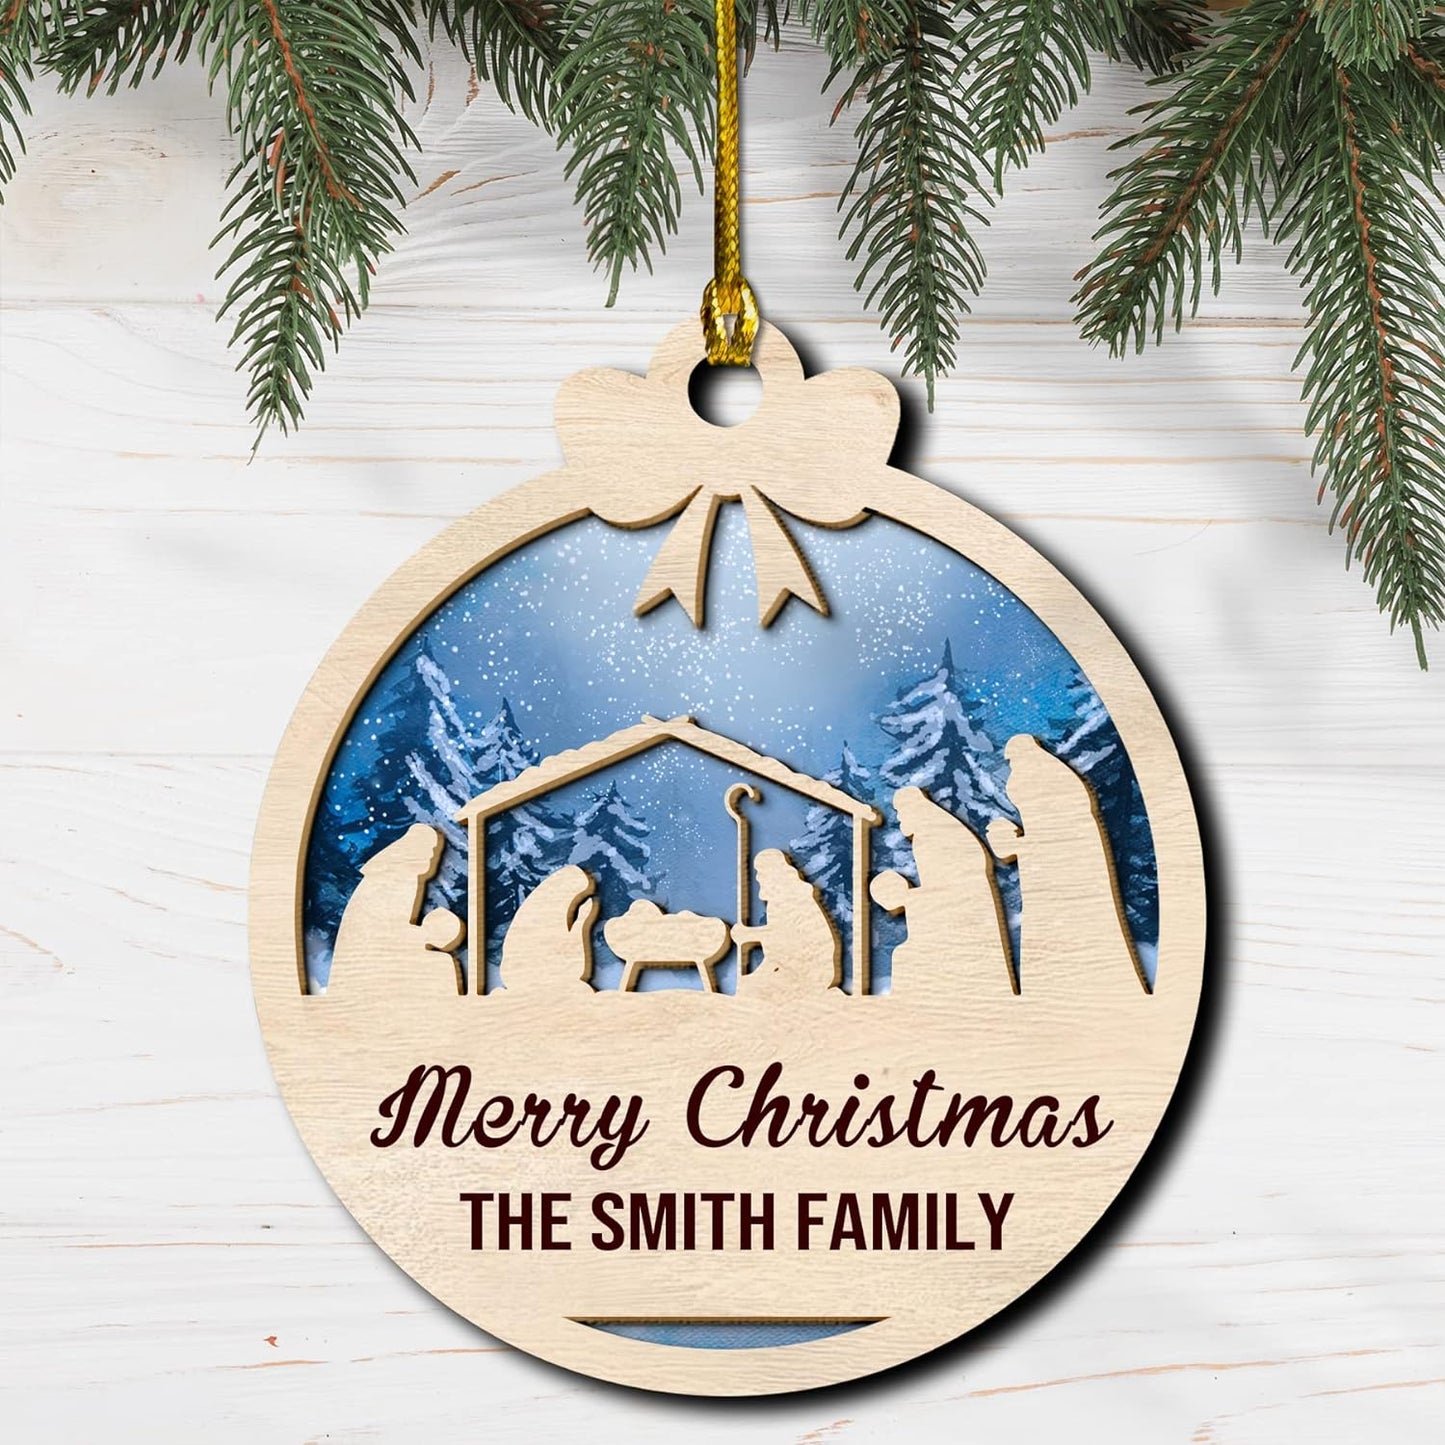 Jesus Personalized Nativity Christmas Family Wood Layered Ornaments - Personalized Ornaments for Christmas Tree Decorations